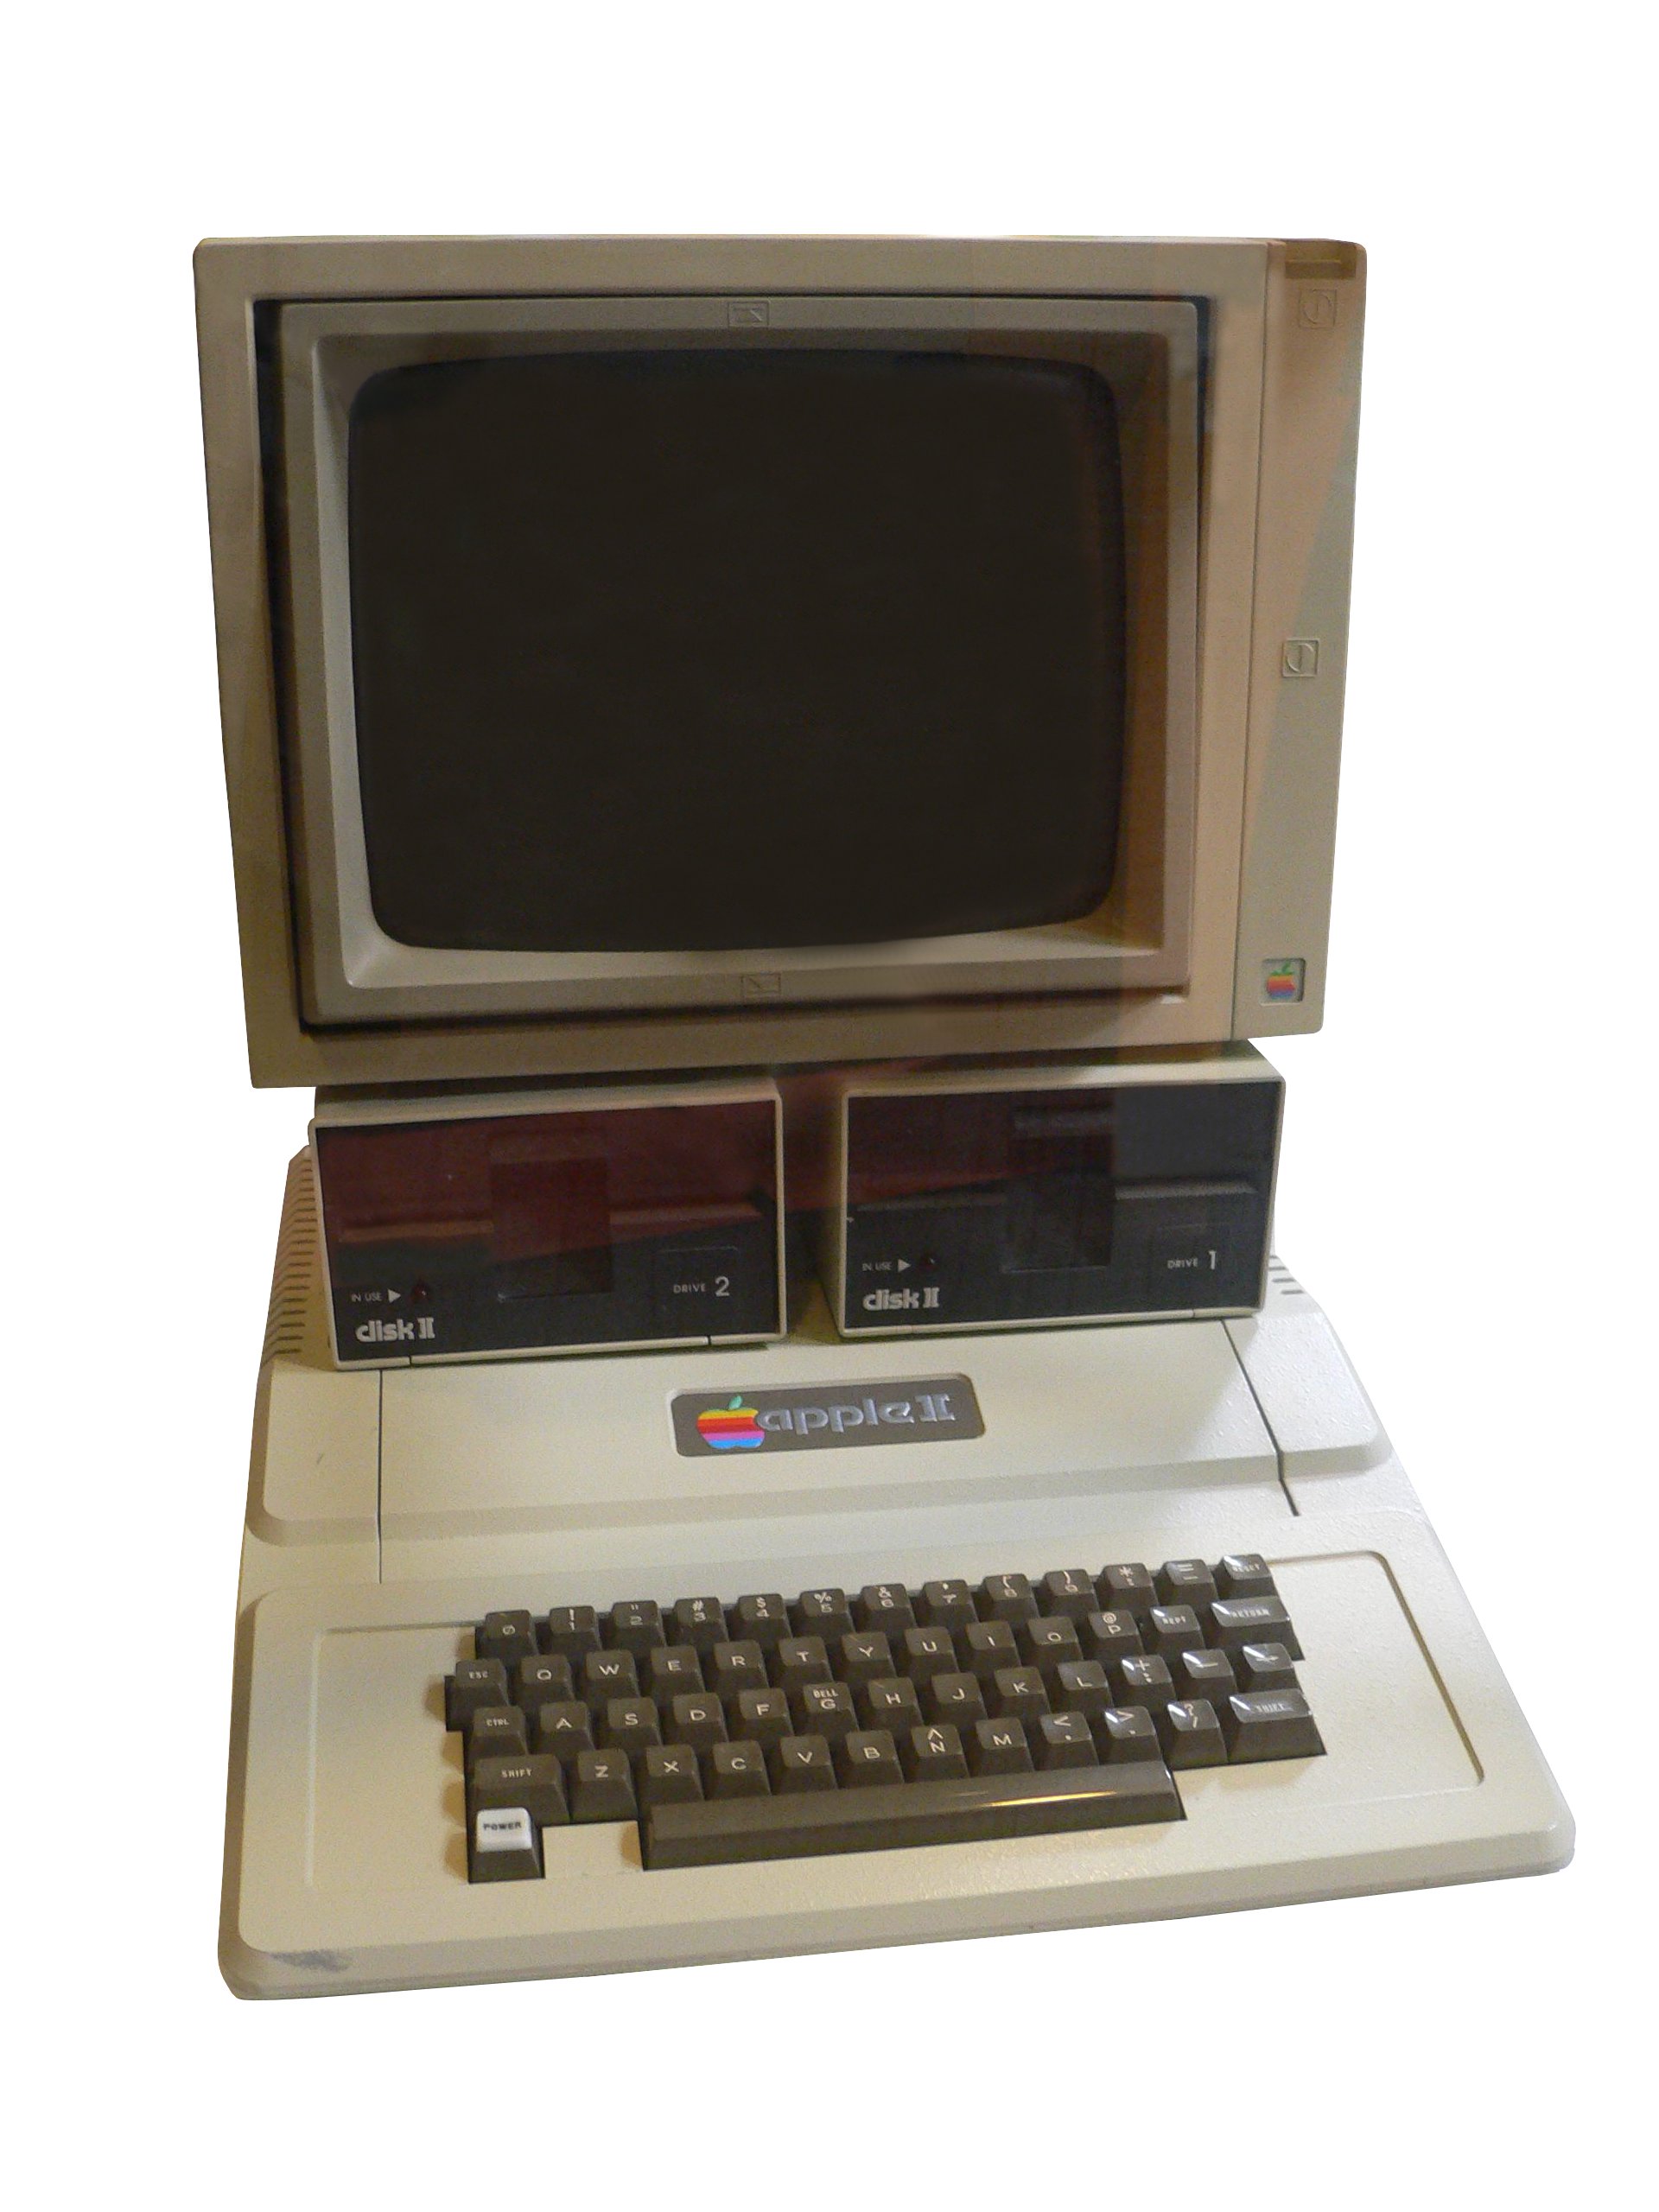 http://upload.wikimedia.org/wikipedia/commons/7/70/Apple-II.jpg